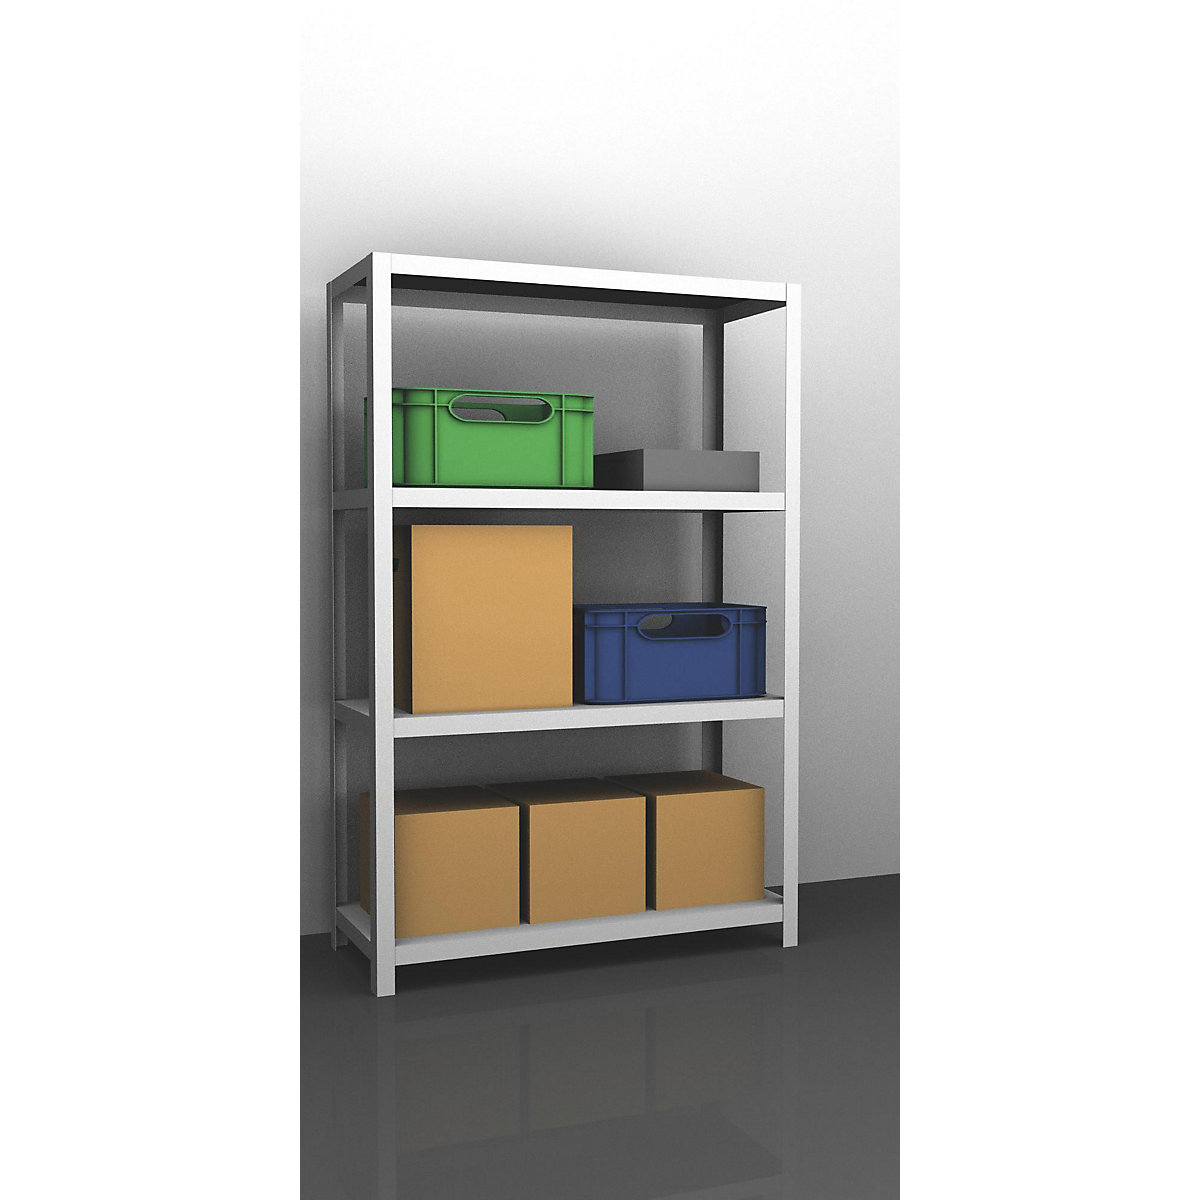 Bolt-together shelf unit, light duty, plastic coated – eurokraft pro, shelf unit height 1500 mm, shelf width 1000 mm, depth 300 mm, standard shelf unit-13